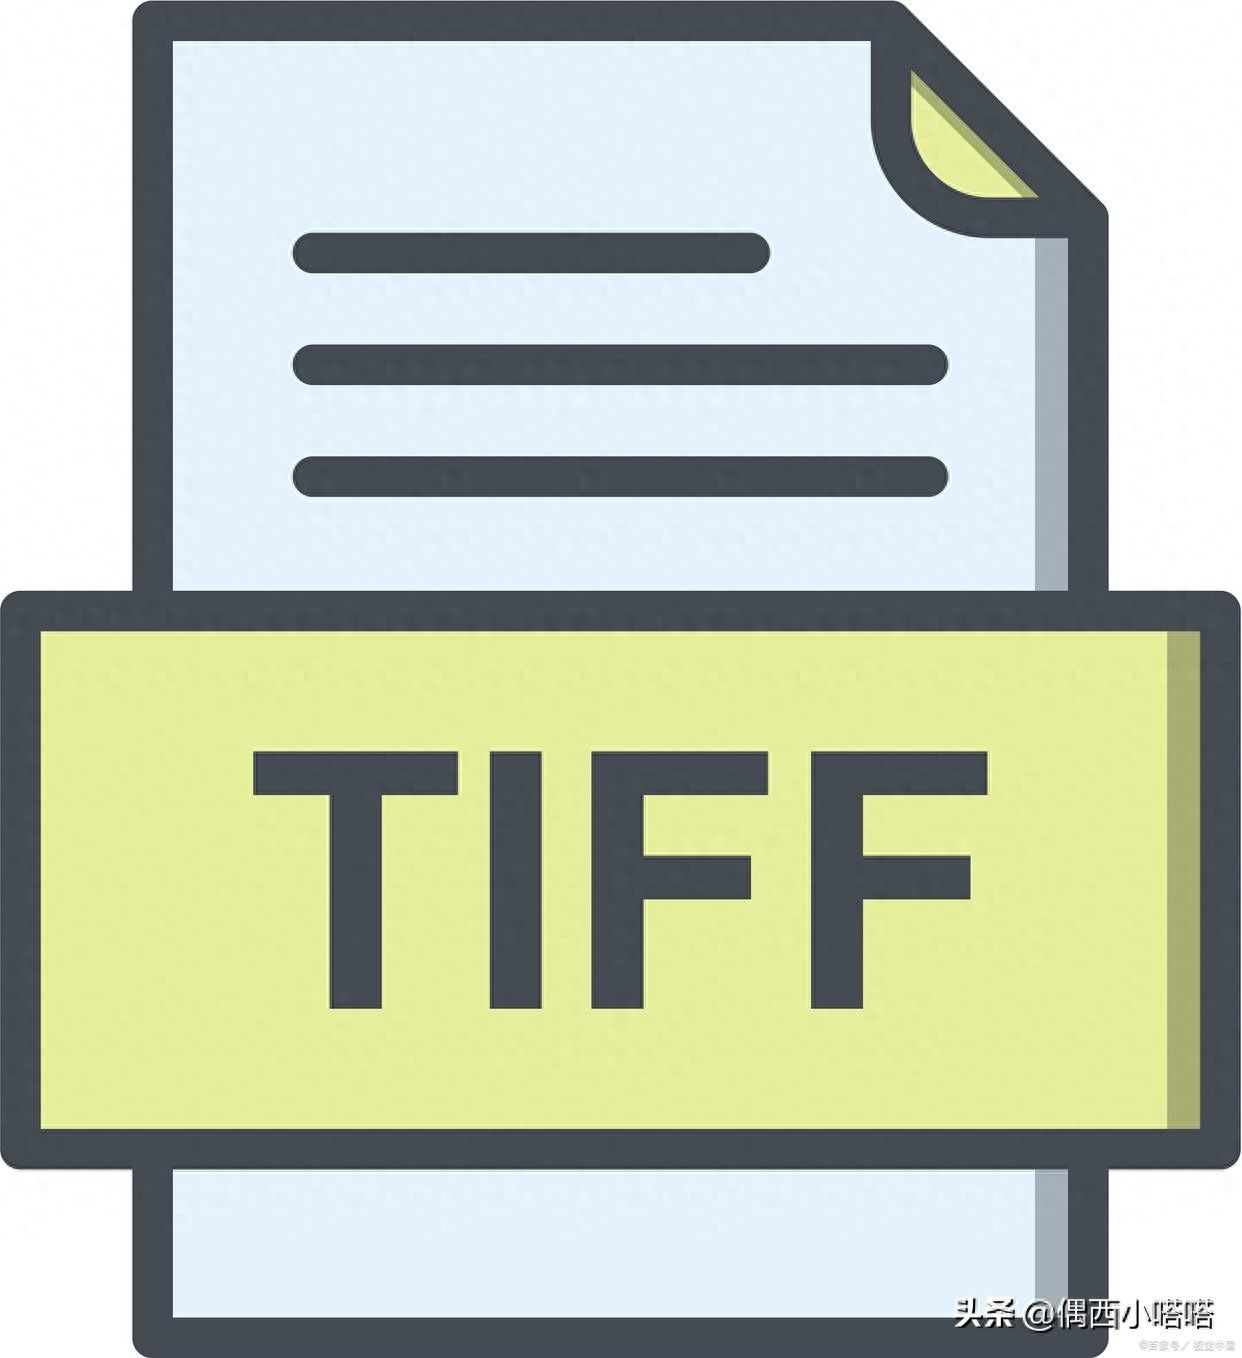 tif格式图片用什么软件打开（手机上能打开tif的软件）